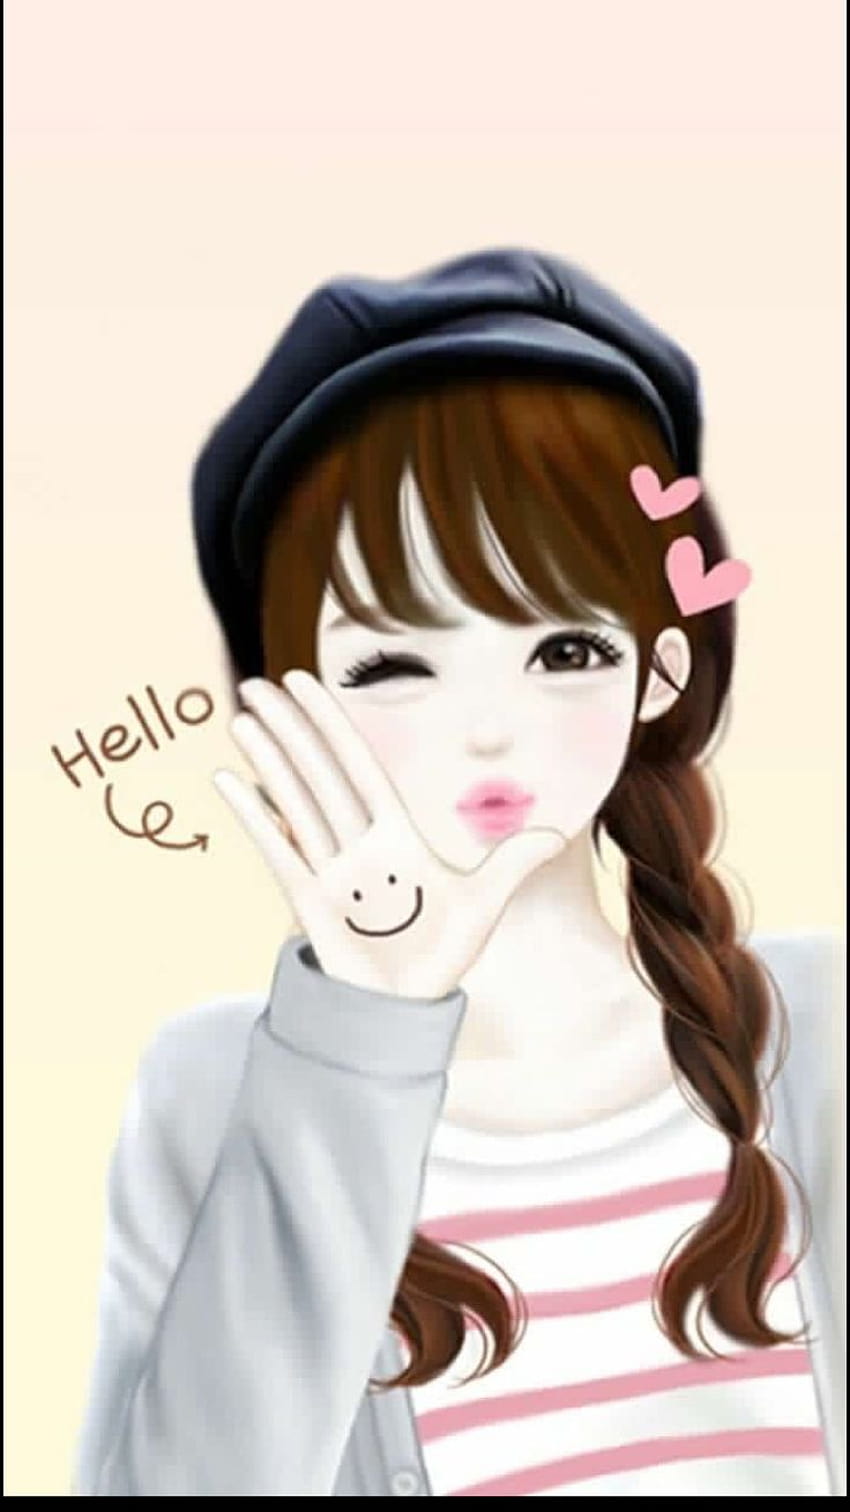 Say Hello to Cute, kartun cewek wallpaper ponsel HD